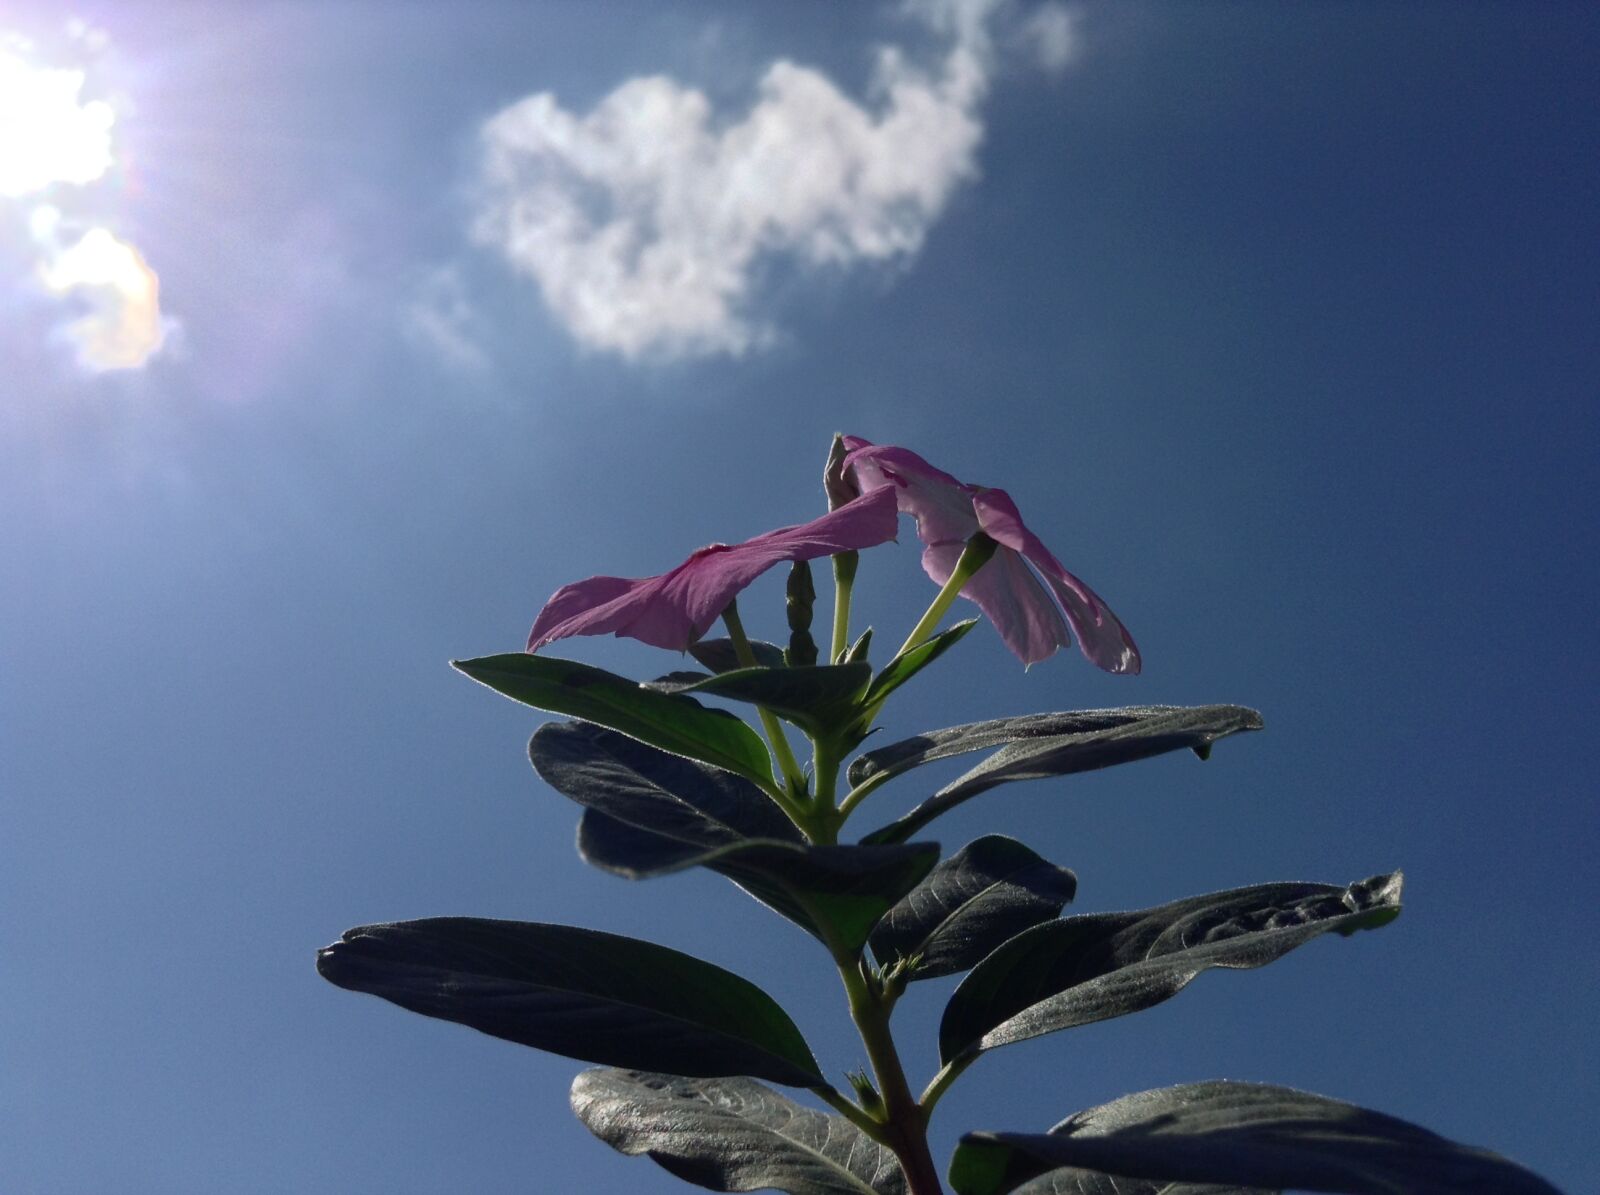 iPad mini back camera 3.3mm f/2.4 sample photo. Flower, sol, clouds photography